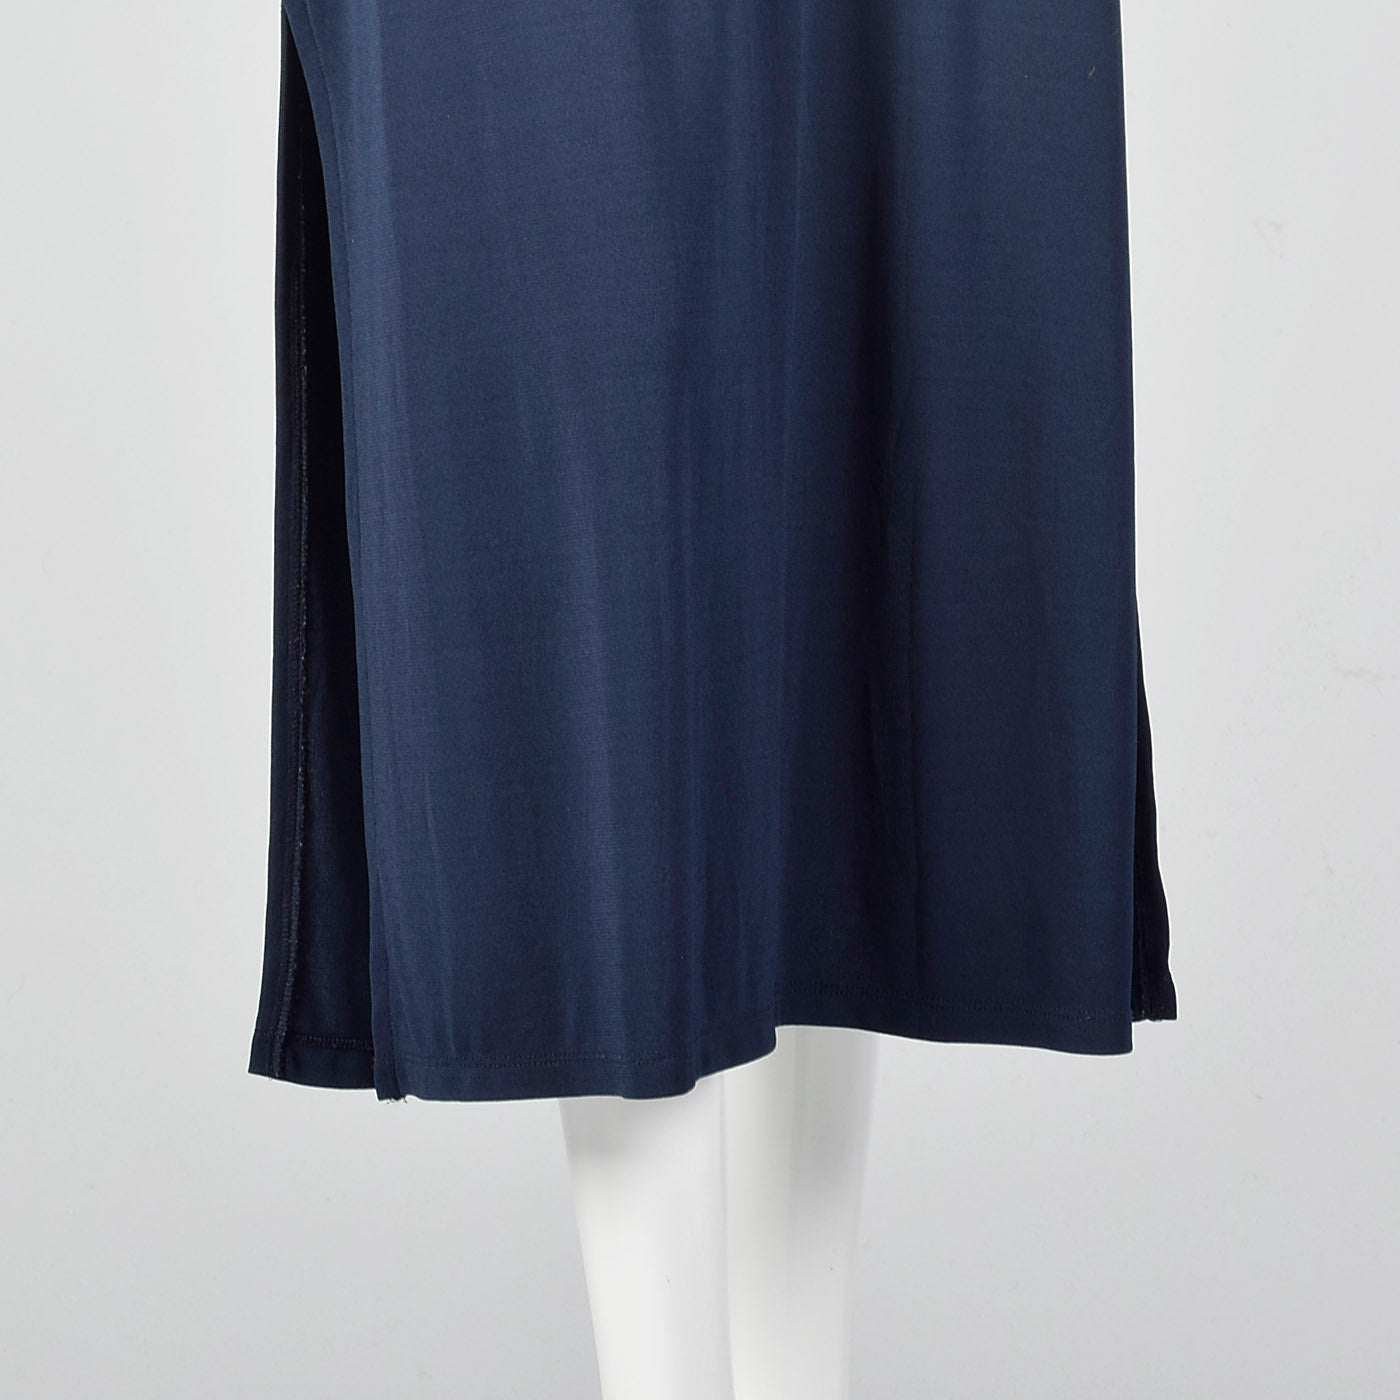 1990s Mary McFadden Maxi Dress with Tie Back Waist